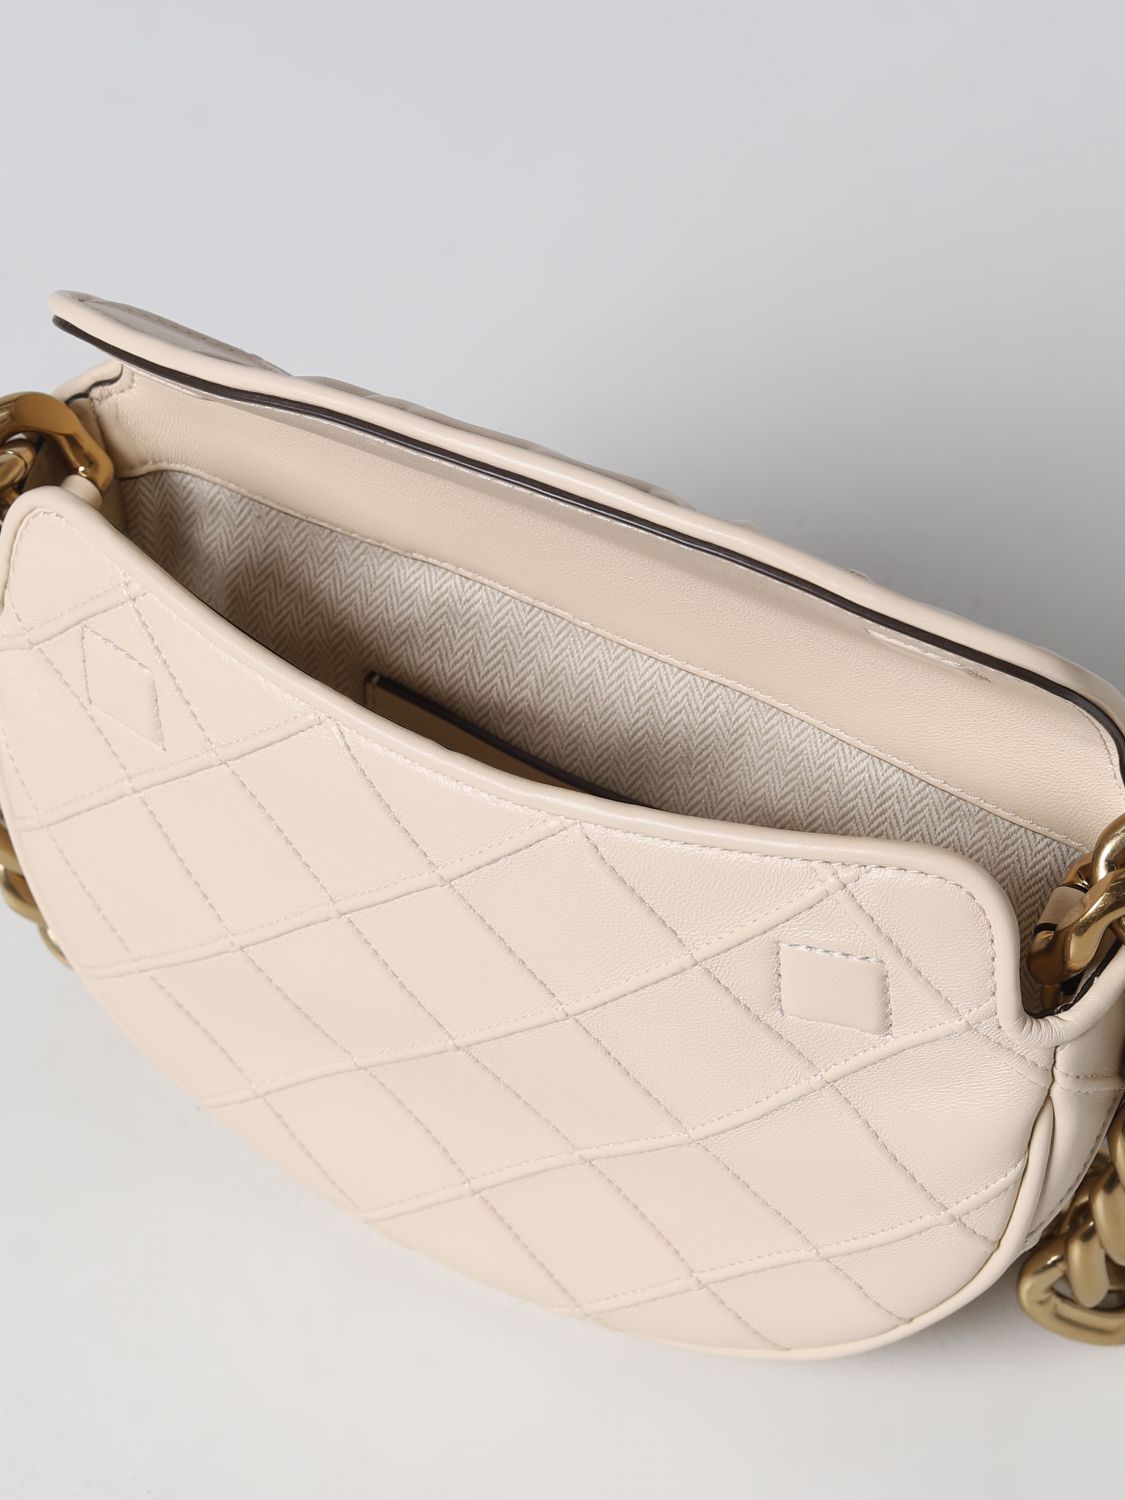 TORY BURCH: crossbody bags for woman - Cream | Tory Burch crossbody bags  143575 online on 